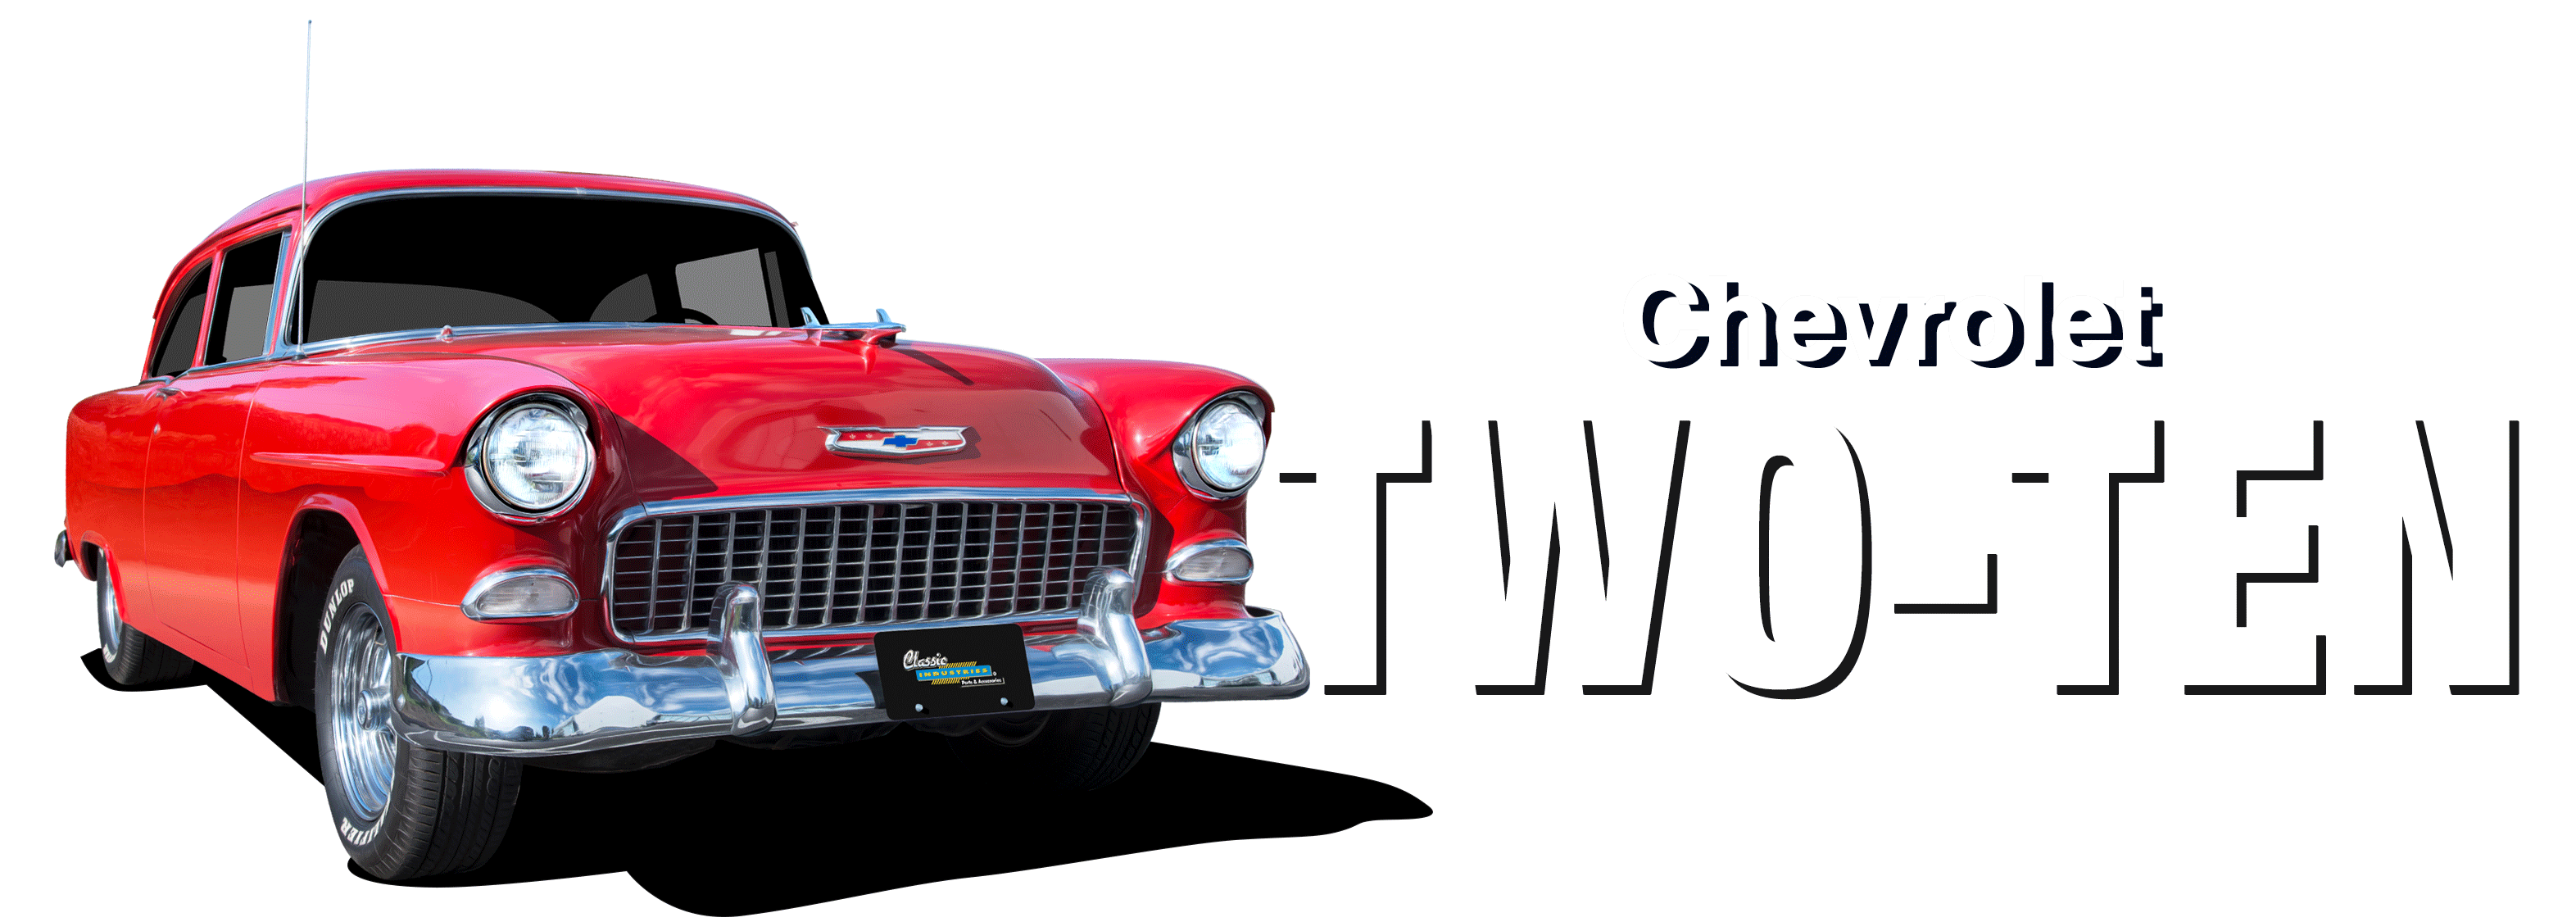 Chevy-TwoTen-vehicle-desktop-2023